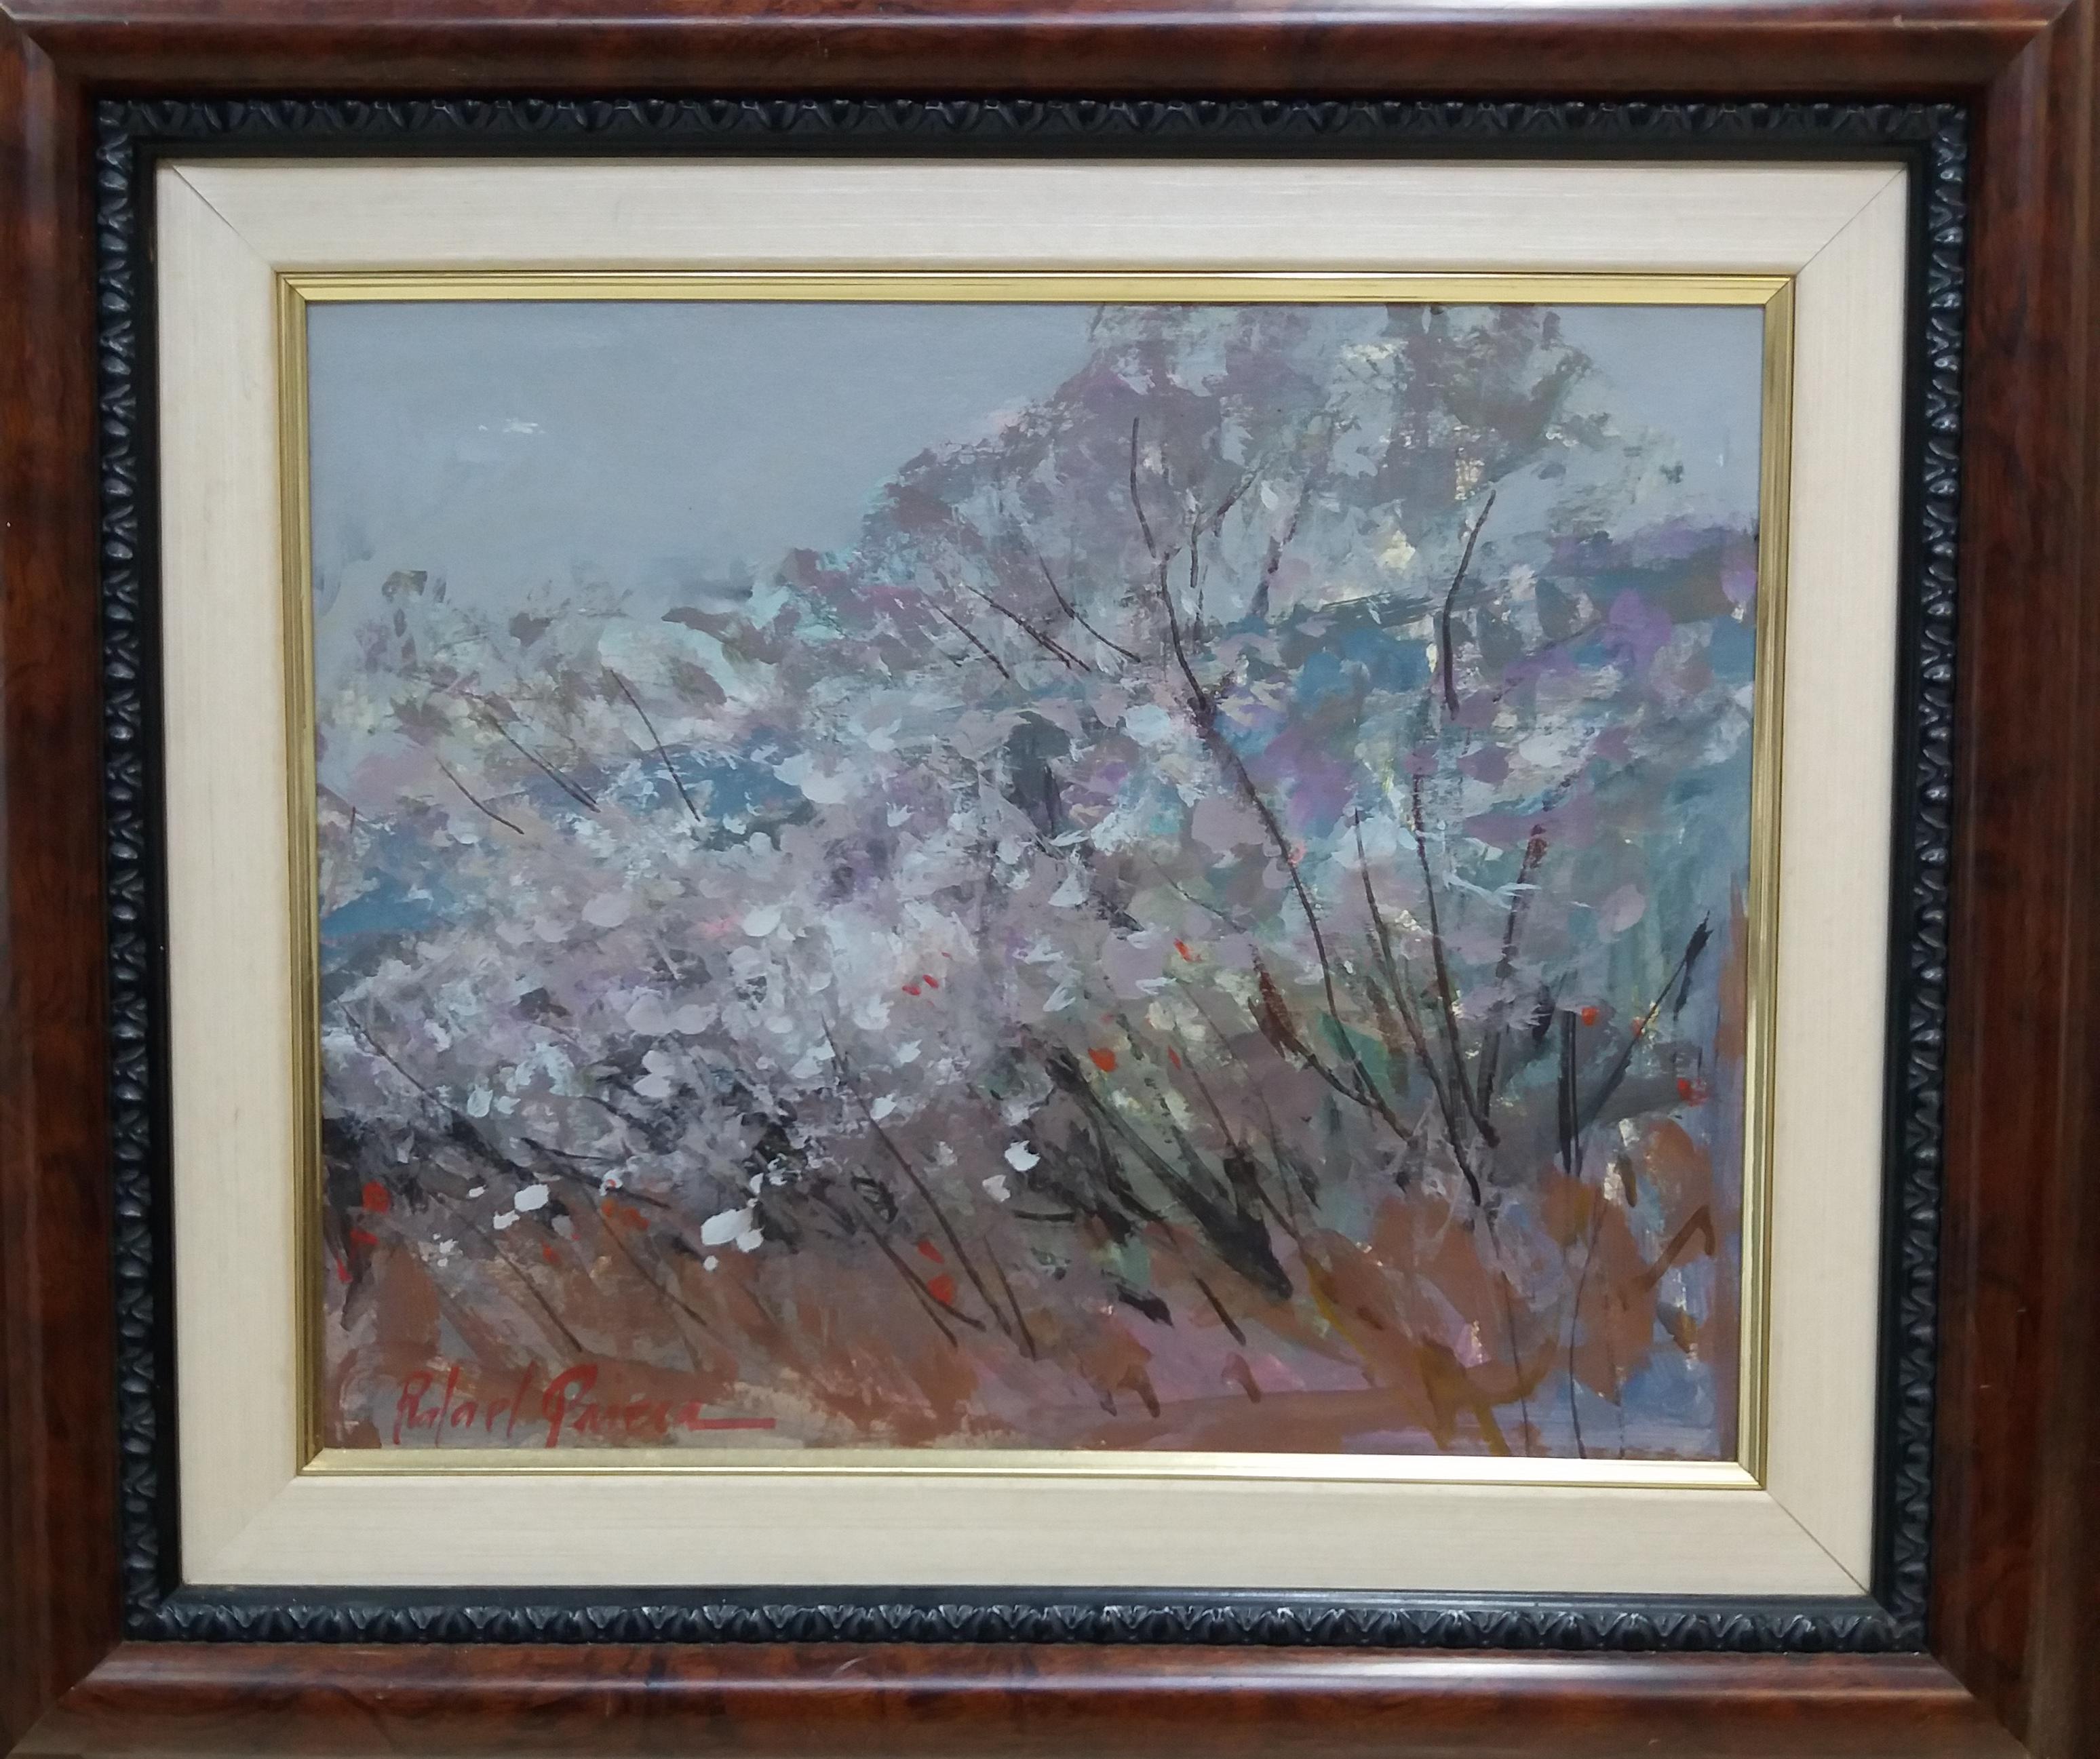 RAFAEL GRIERA Landscape Painting - Paisaje original expressionist acrylic painting